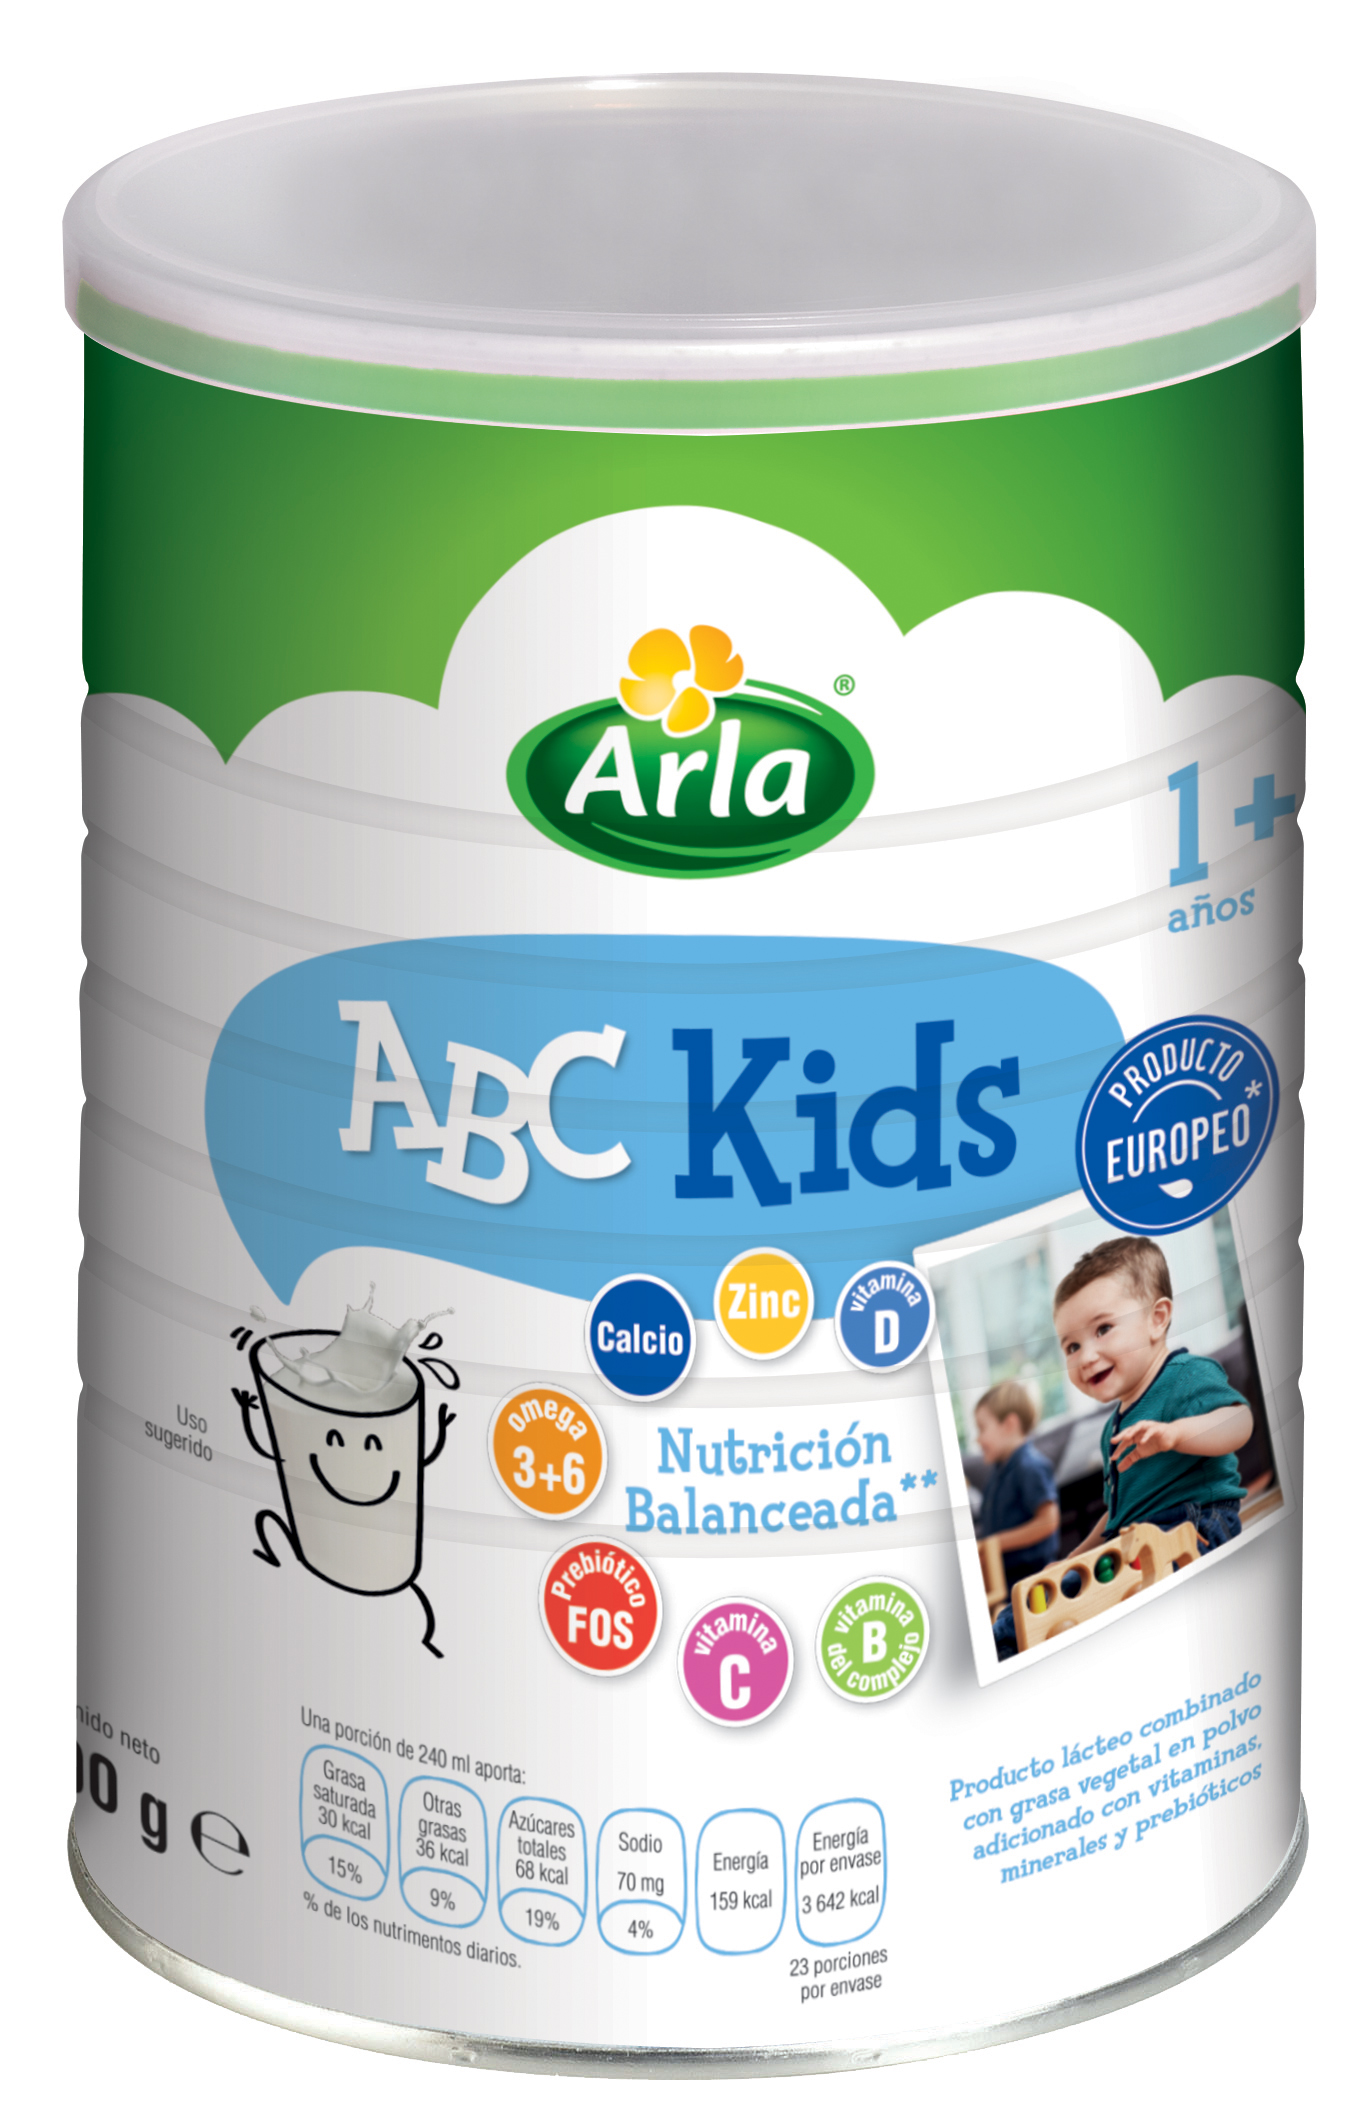 Arla ABC Kids® ABC Kids Lata 800g